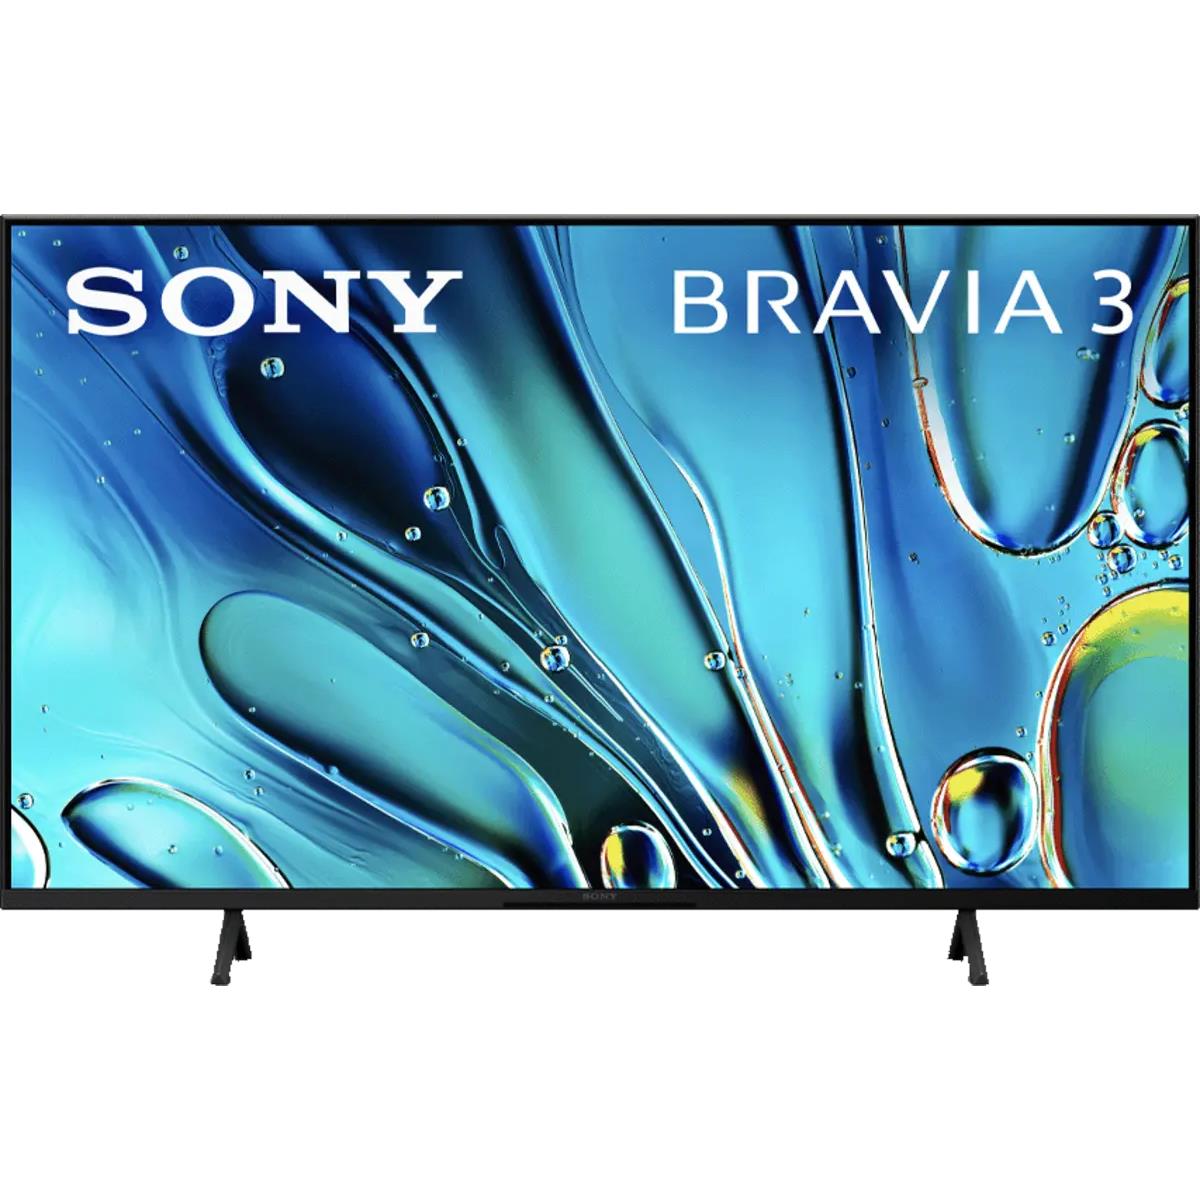 Sony K-43S30 BRAVIA 3 43" 4K LED Television HDR Smart TV (2024)